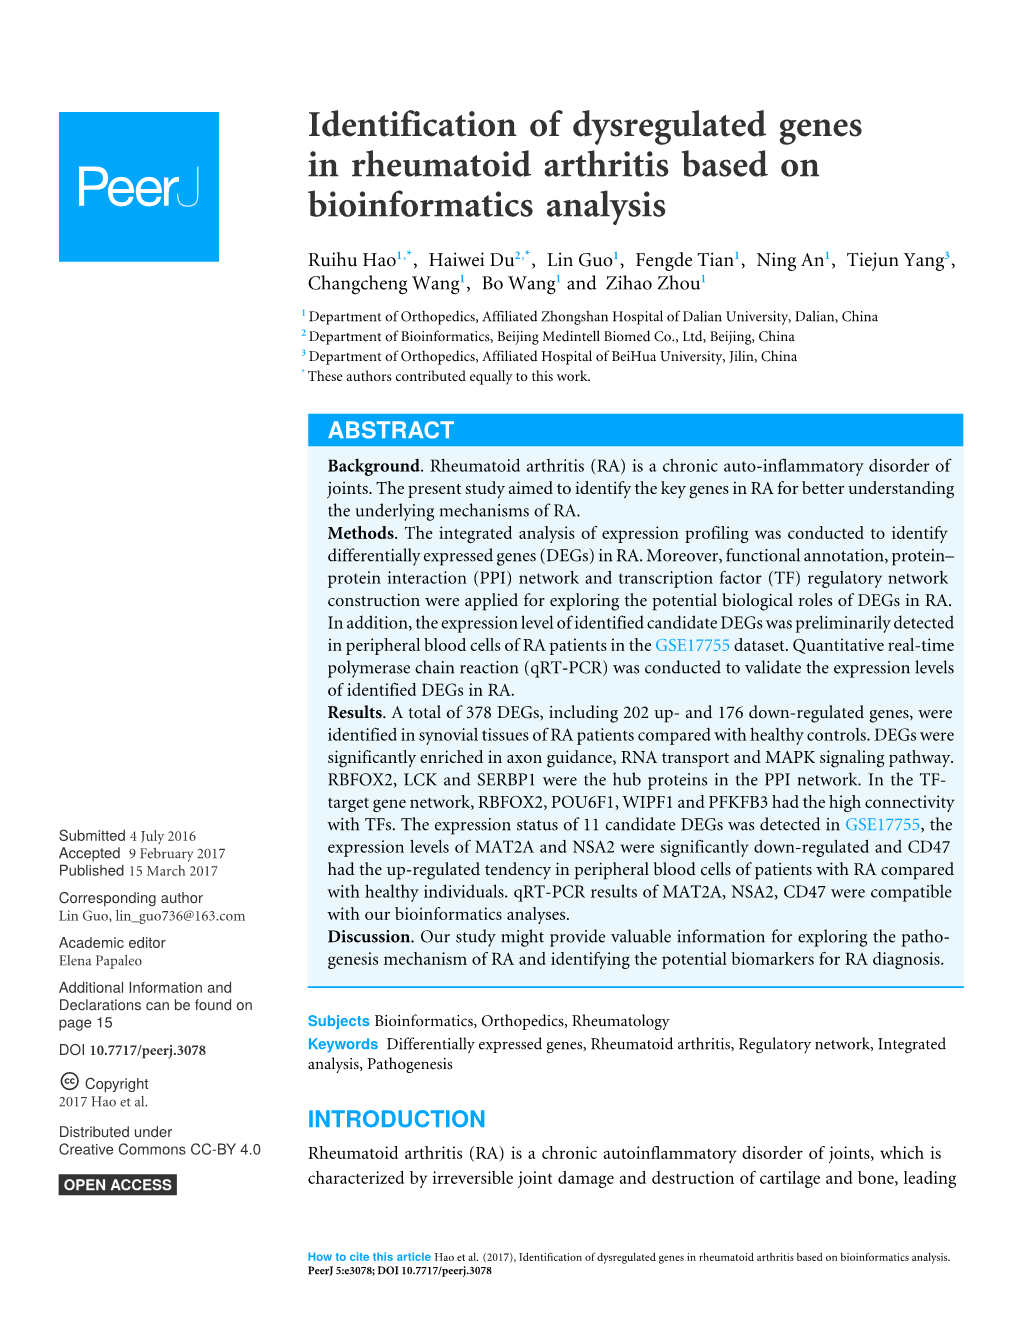 Identification of Dysregulated Genes in Rheumatoid Arthritis Based on Bioinformatics Analysis